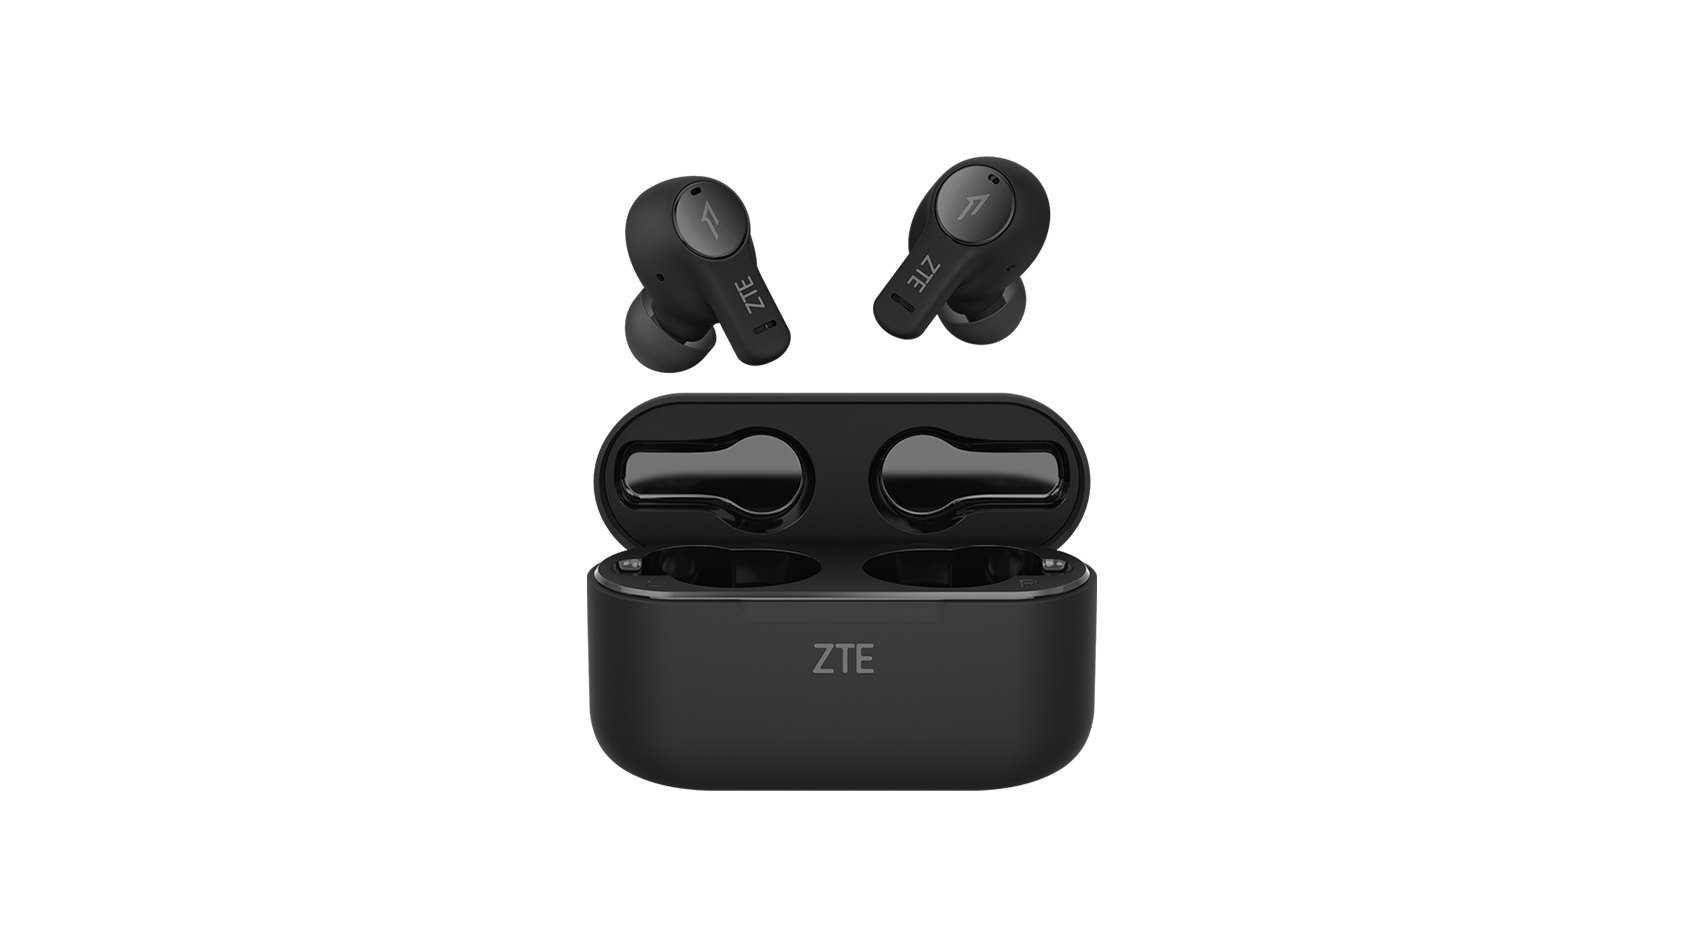 ZTE TWS Earbuds product render